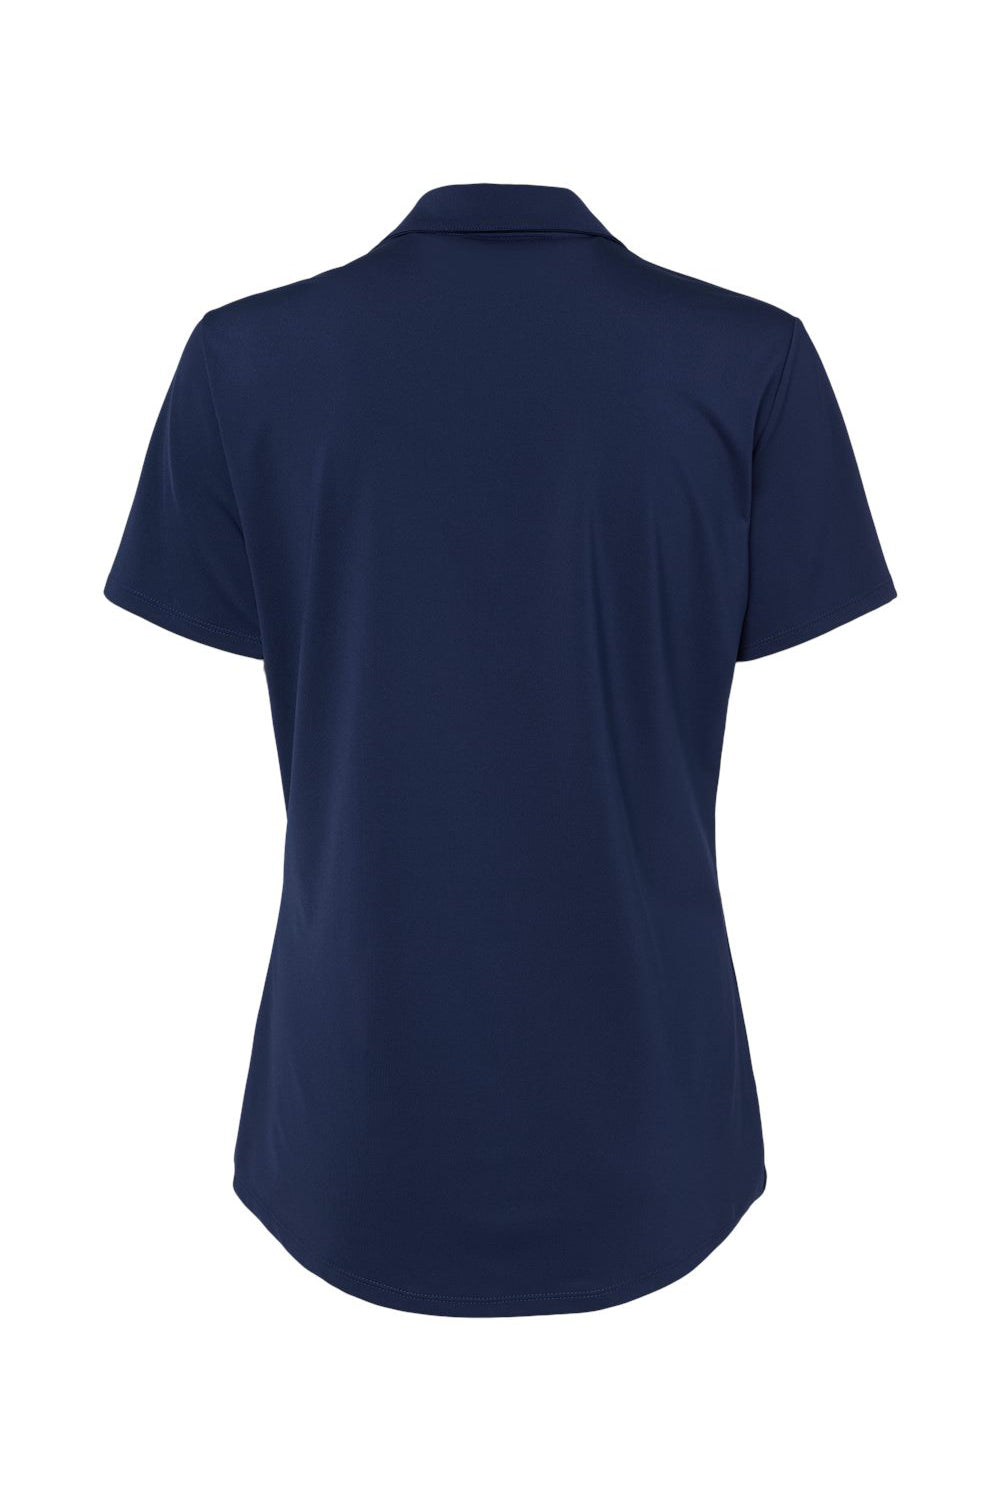 Adidas A515 Womens Ultimate Moisture Wicking Short Sleeve Polo Shirt Team Navy Blue Flat Back